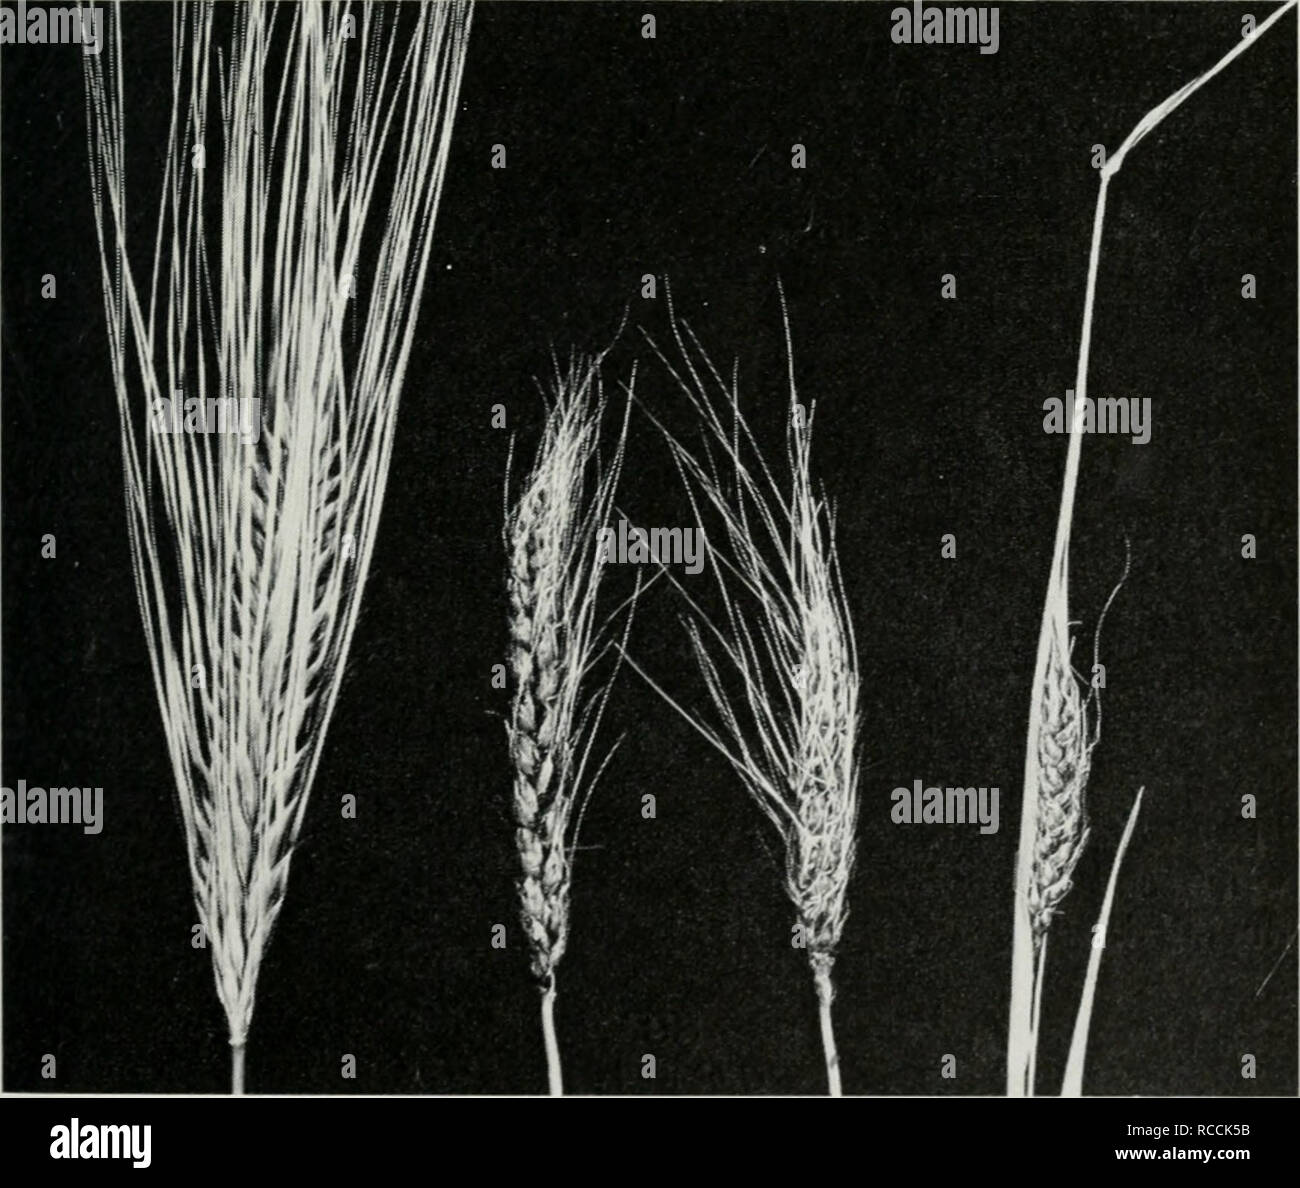 barley vs wheat plant